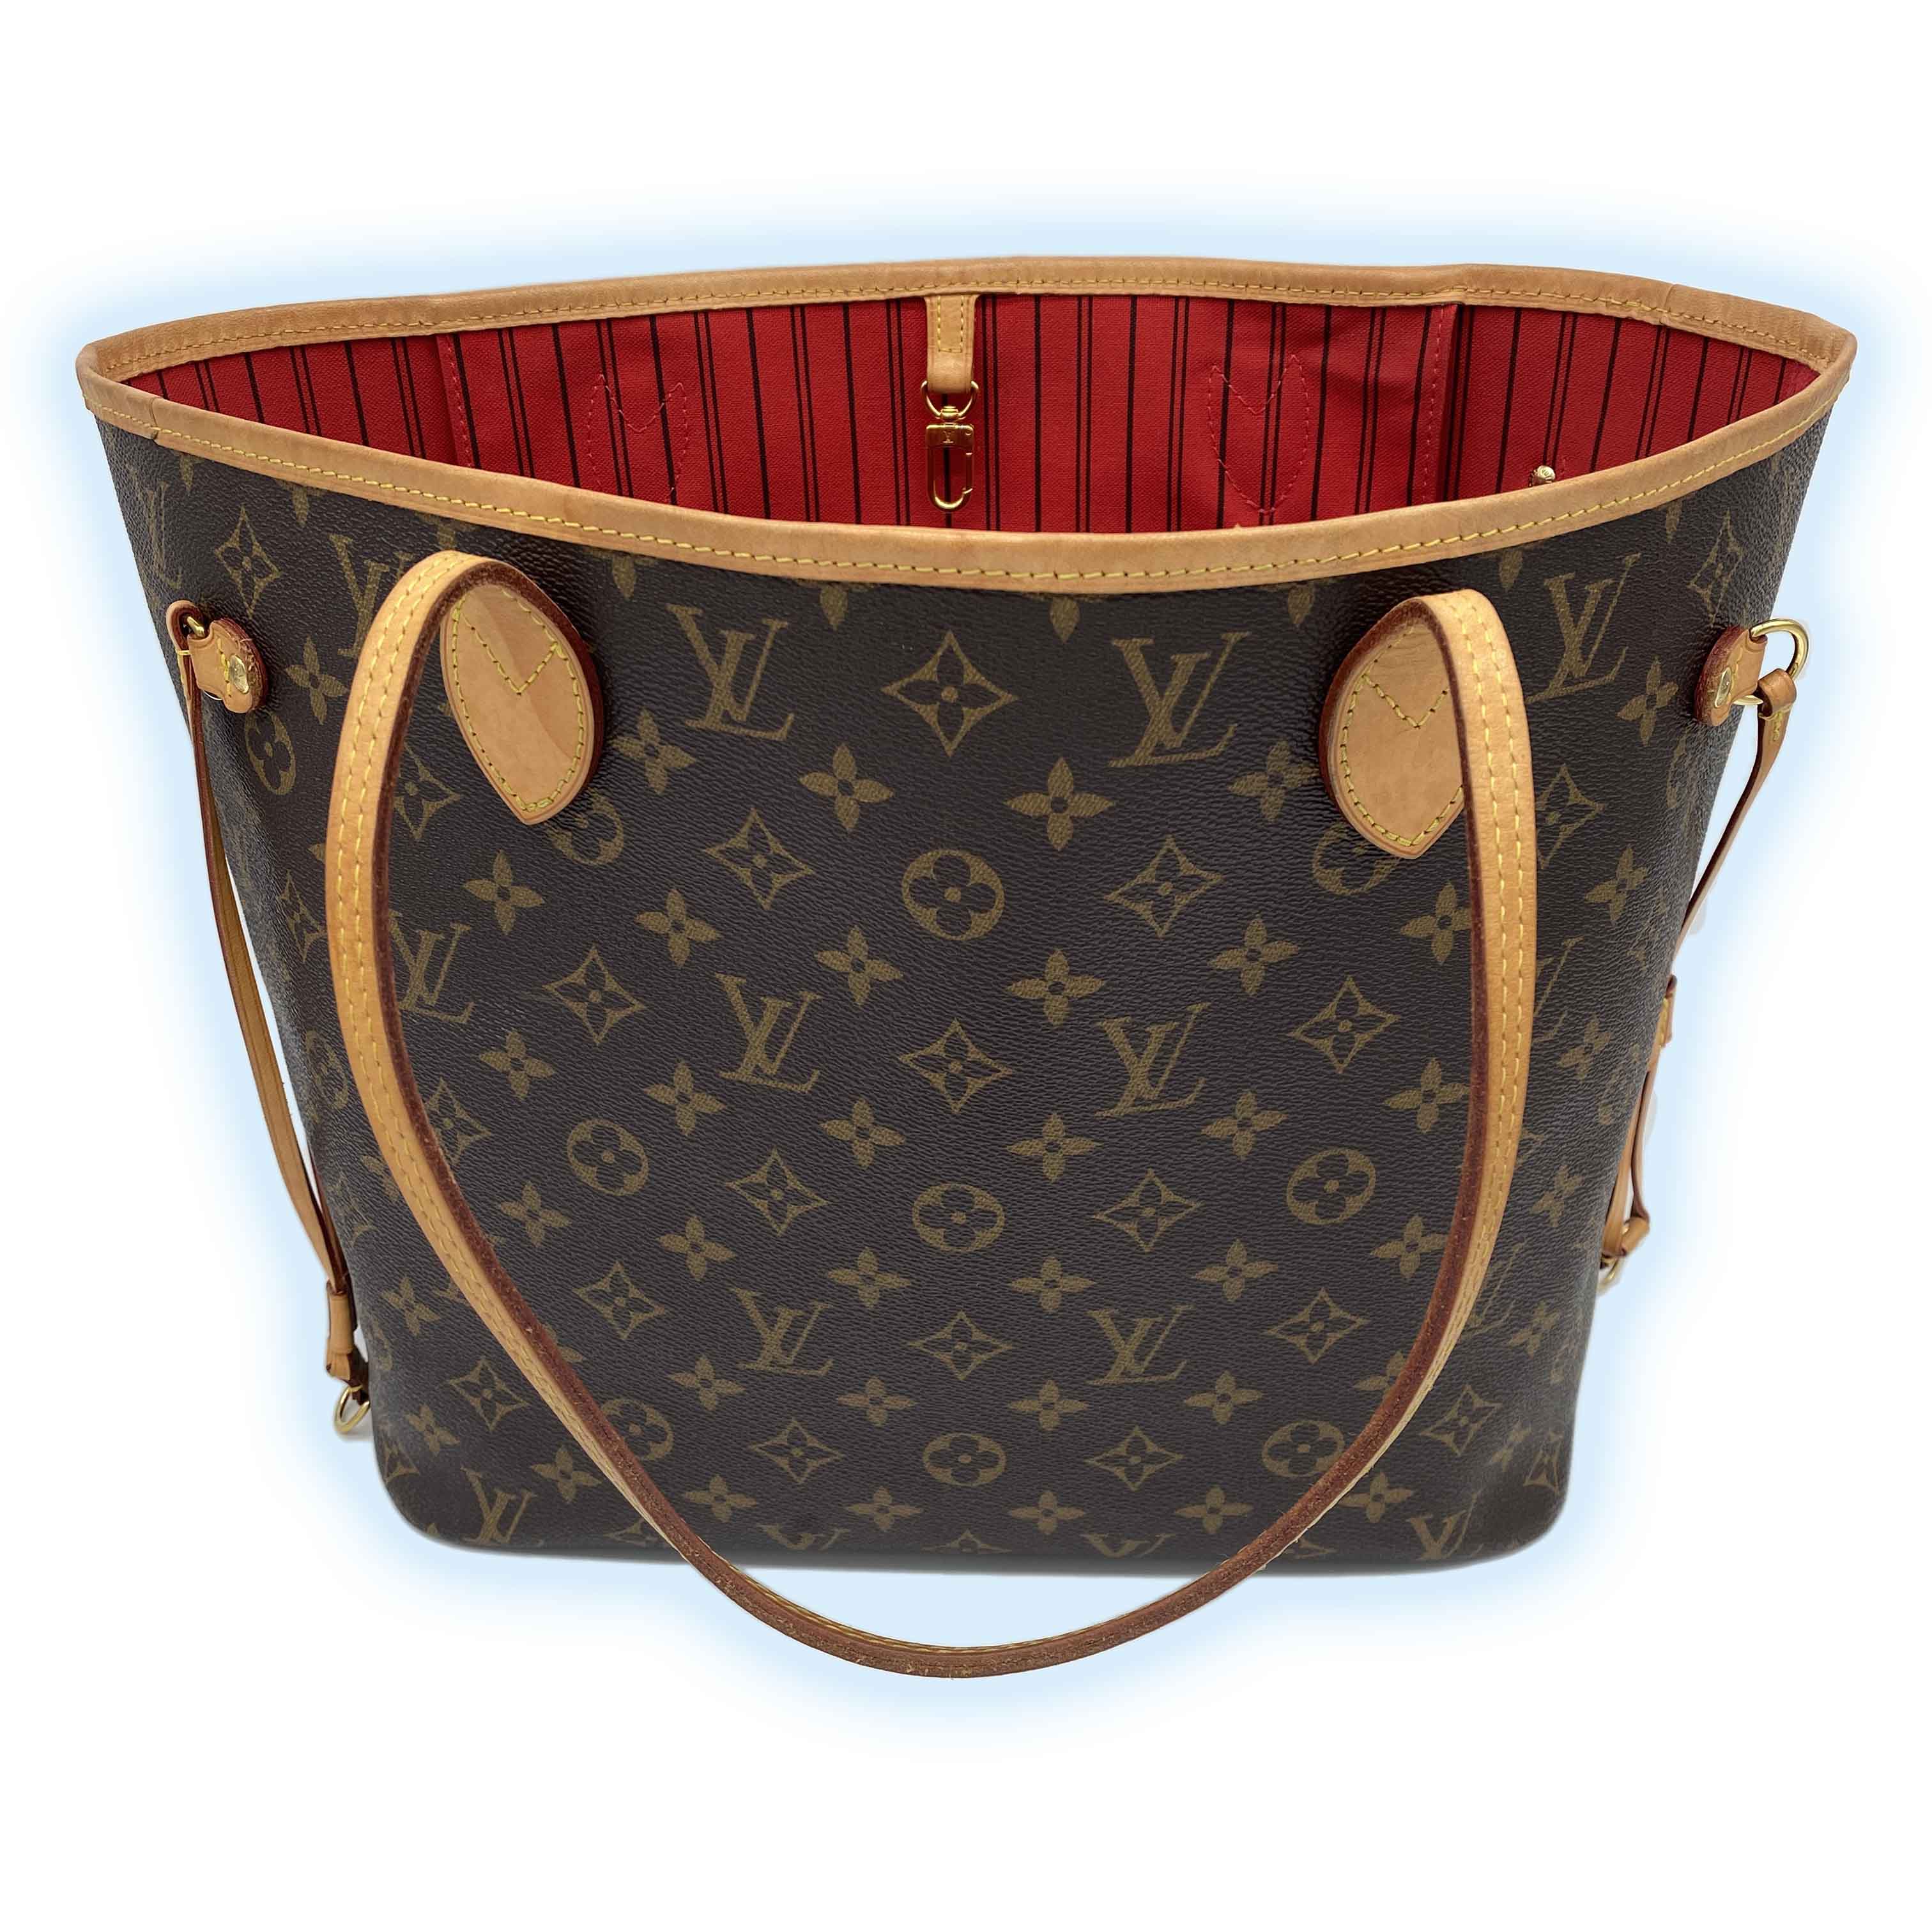 Authentic Louis Vuitton MM 2014 handbags Neverfull mm mono cherry CA4184  W/pouch